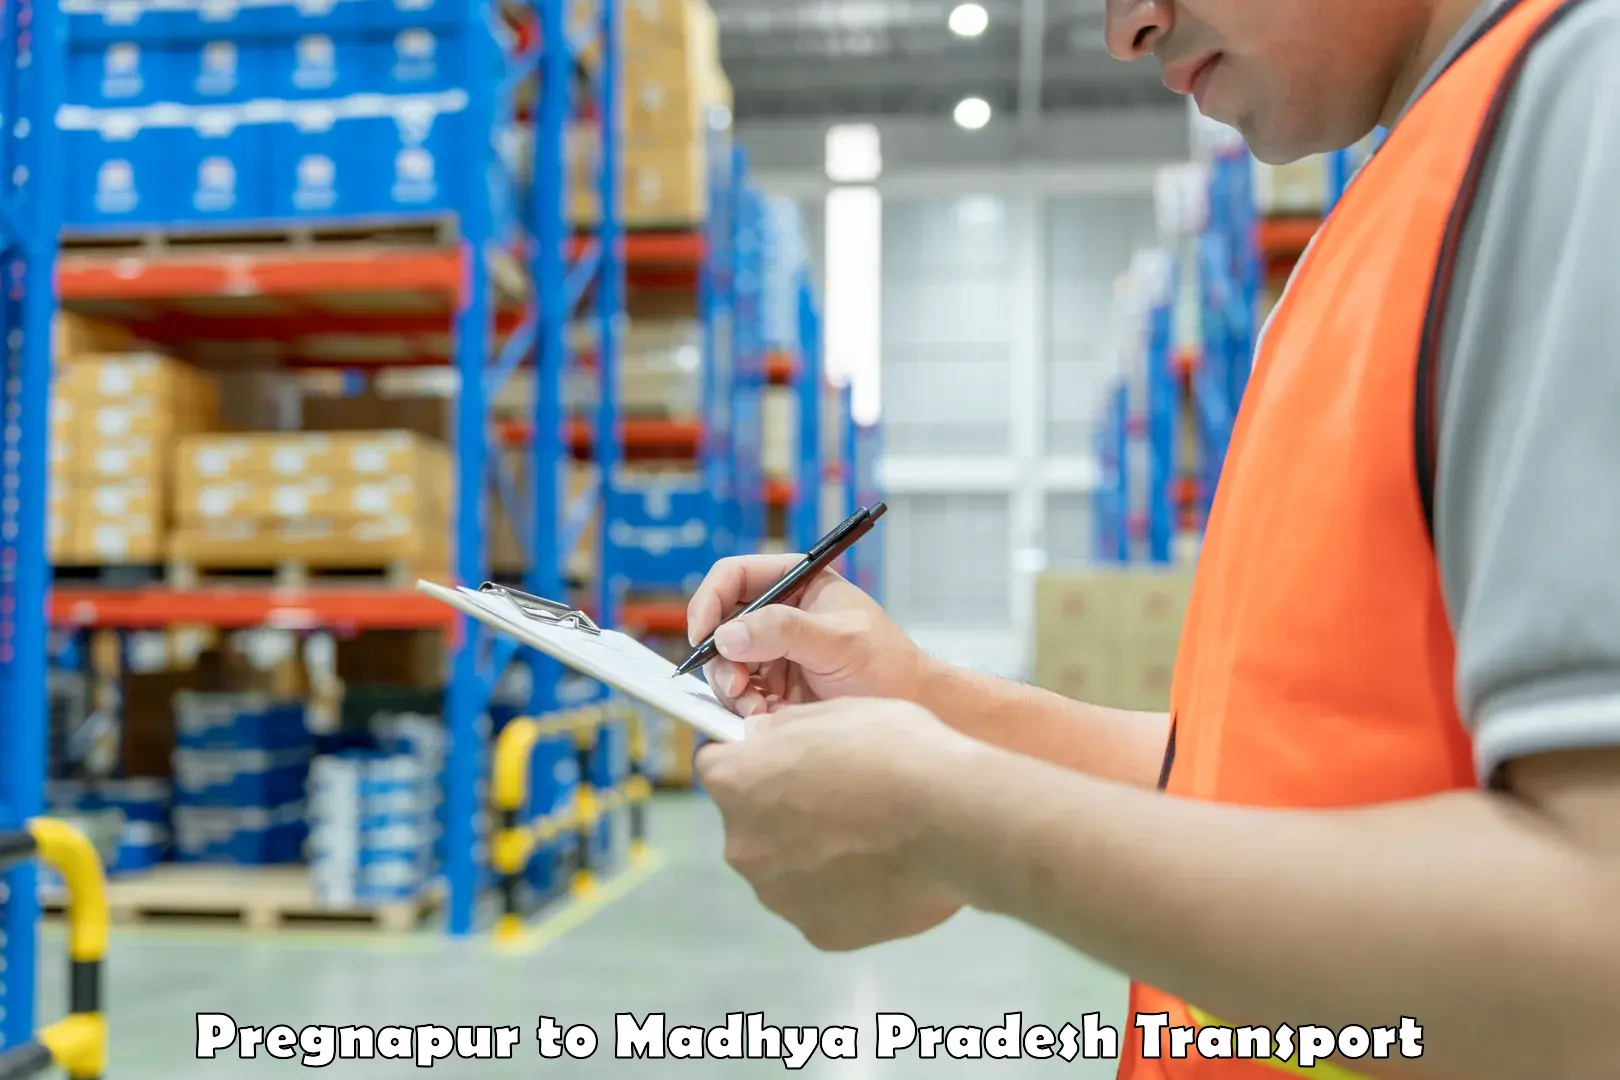 Goods delivery service Pregnapur to Binaganj